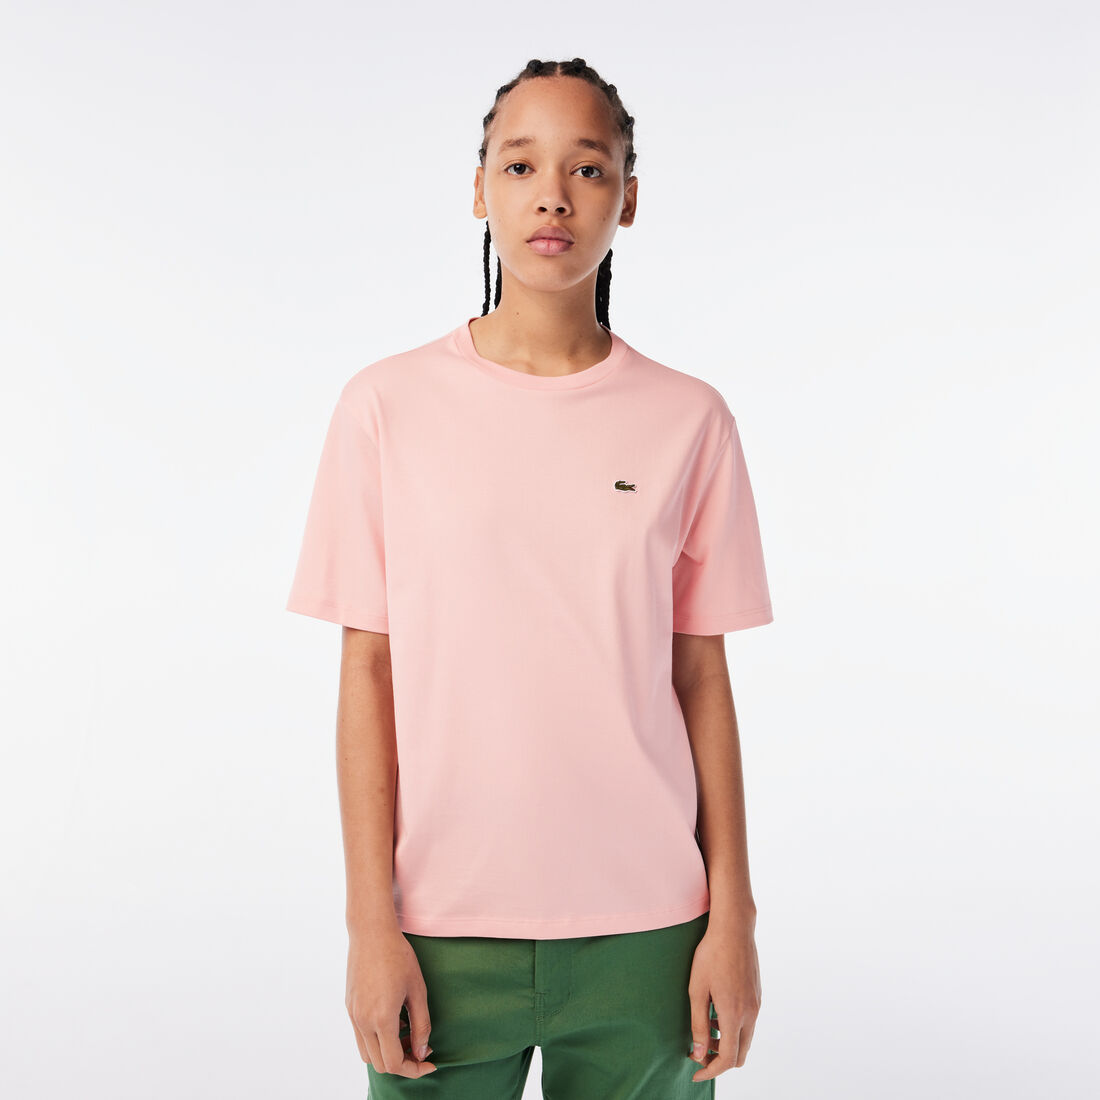 Lacoste Crew Neck Premium Baumwoll T-shirts Damen Rosa | YOMW-69702